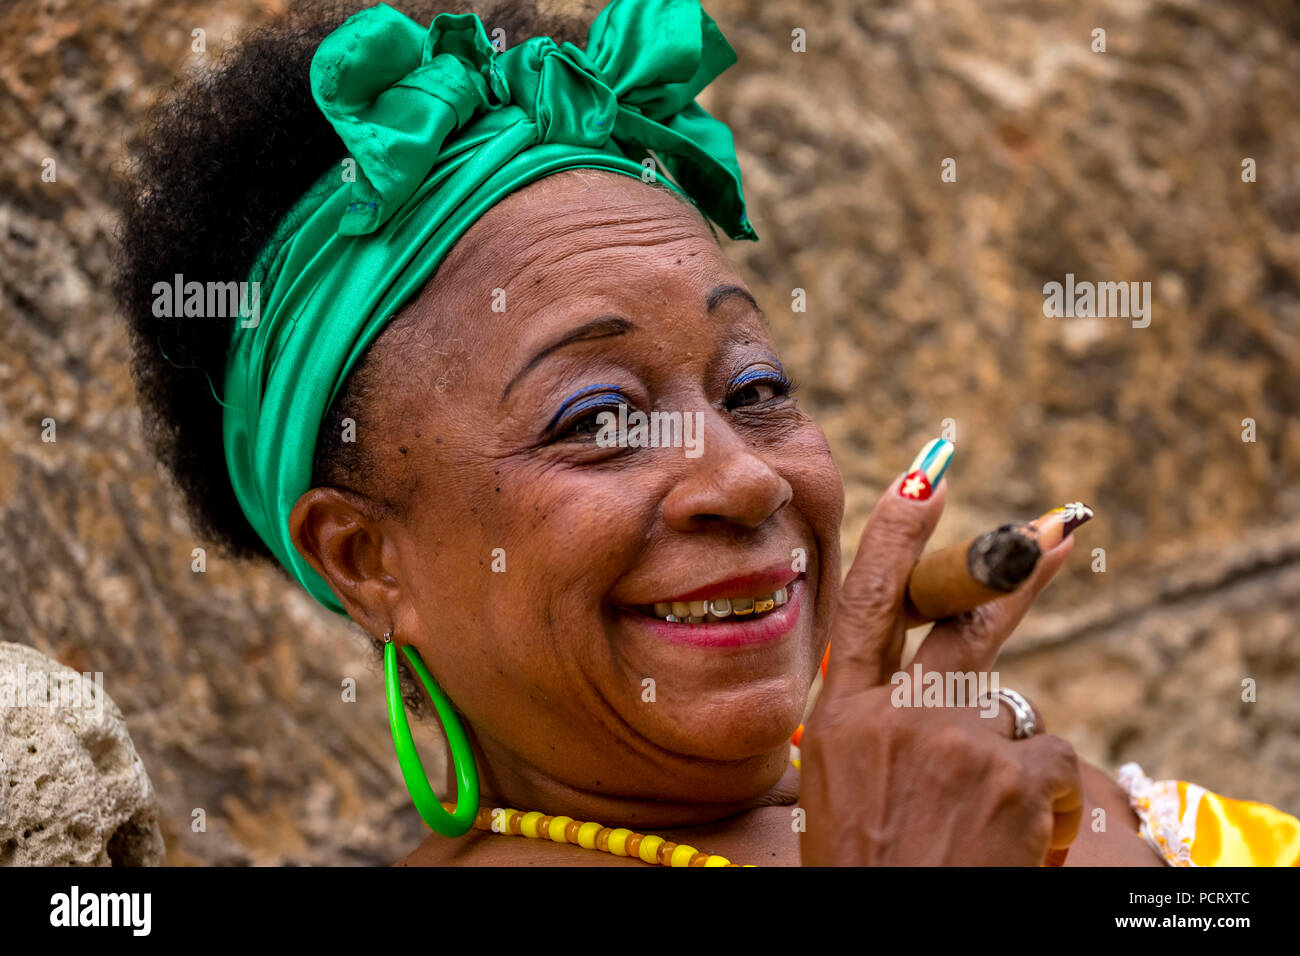 Old mujer cubana con cinta de pelo verde se fuma un habano, Caribe, América Central, La Habana, Cuba Foto de stock